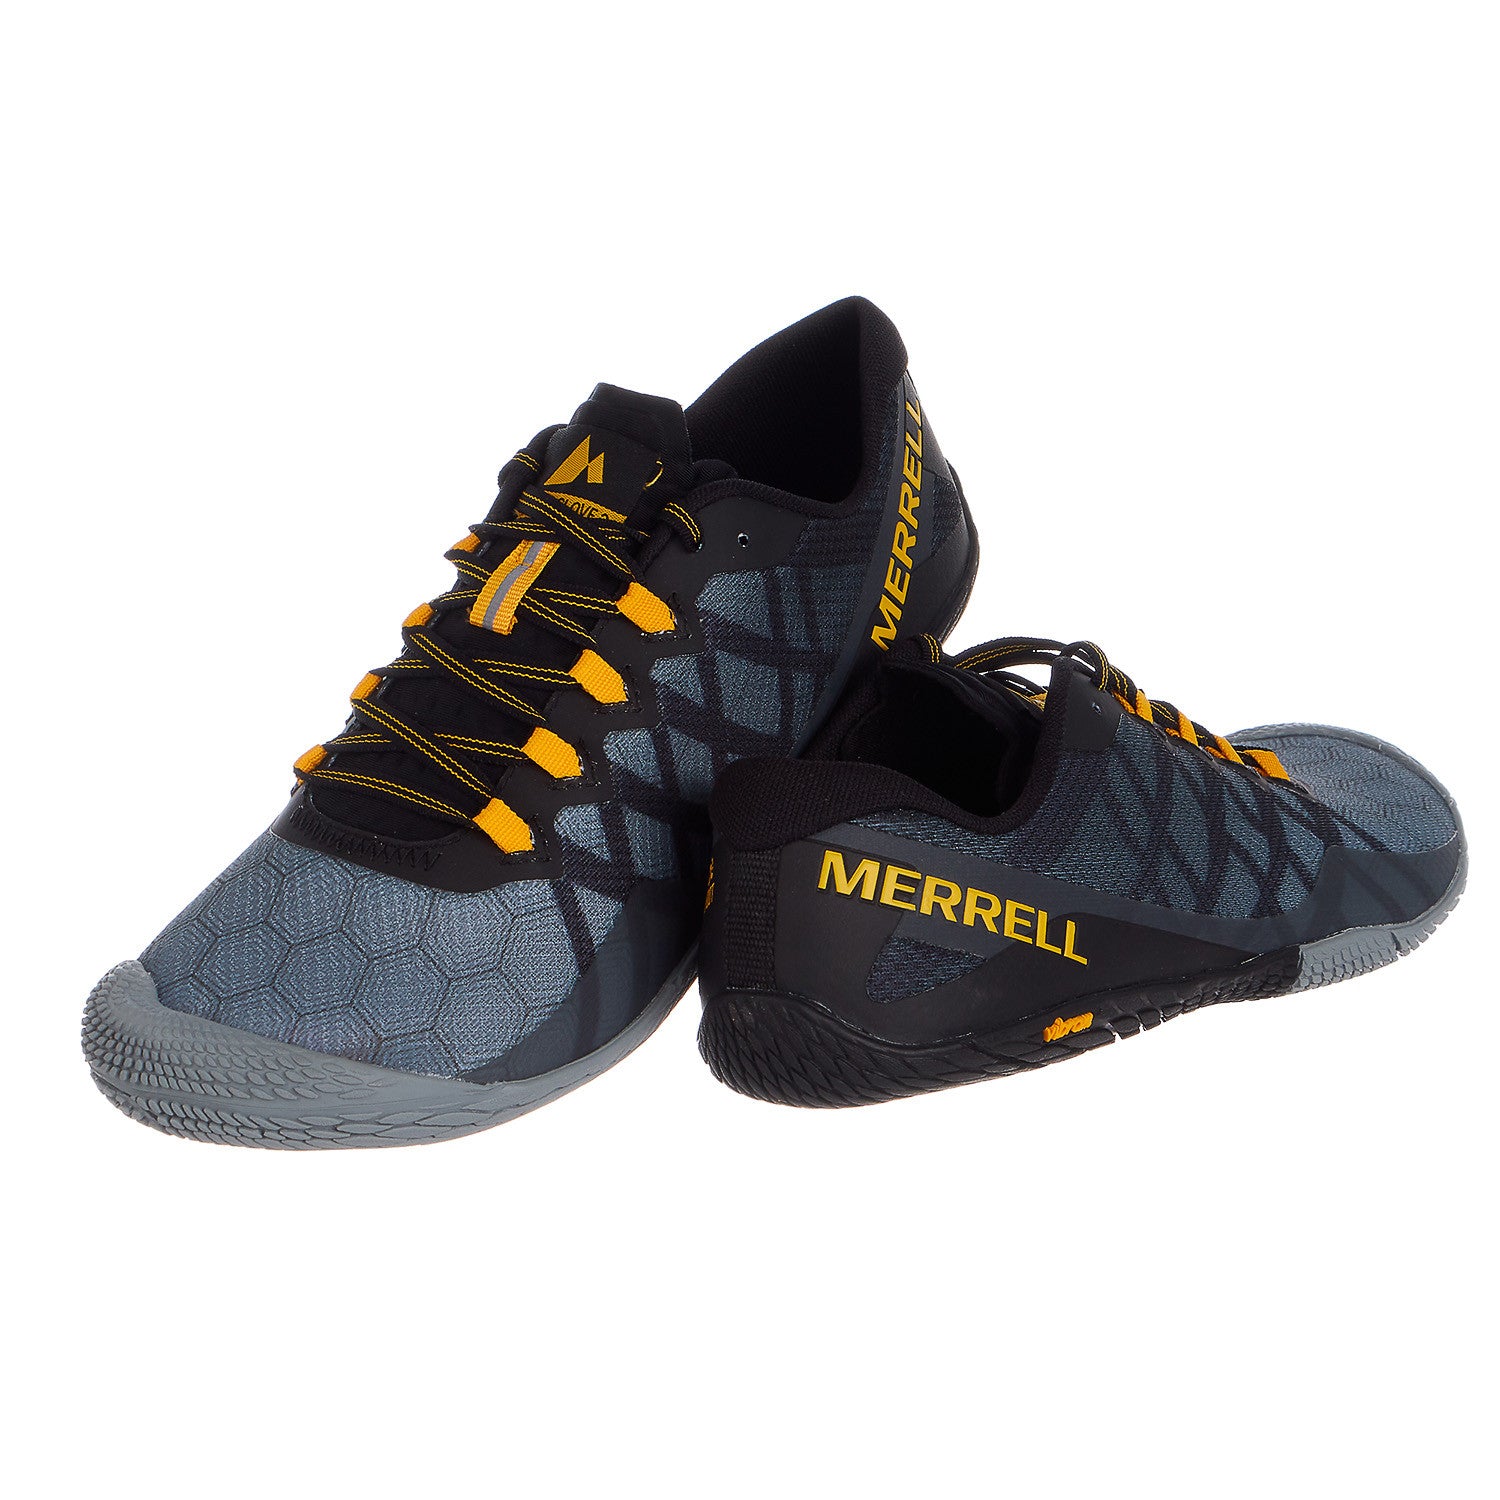  Merrell Women's Barefoot Vapor Glove Running Shoe,Black,6.5 M  US